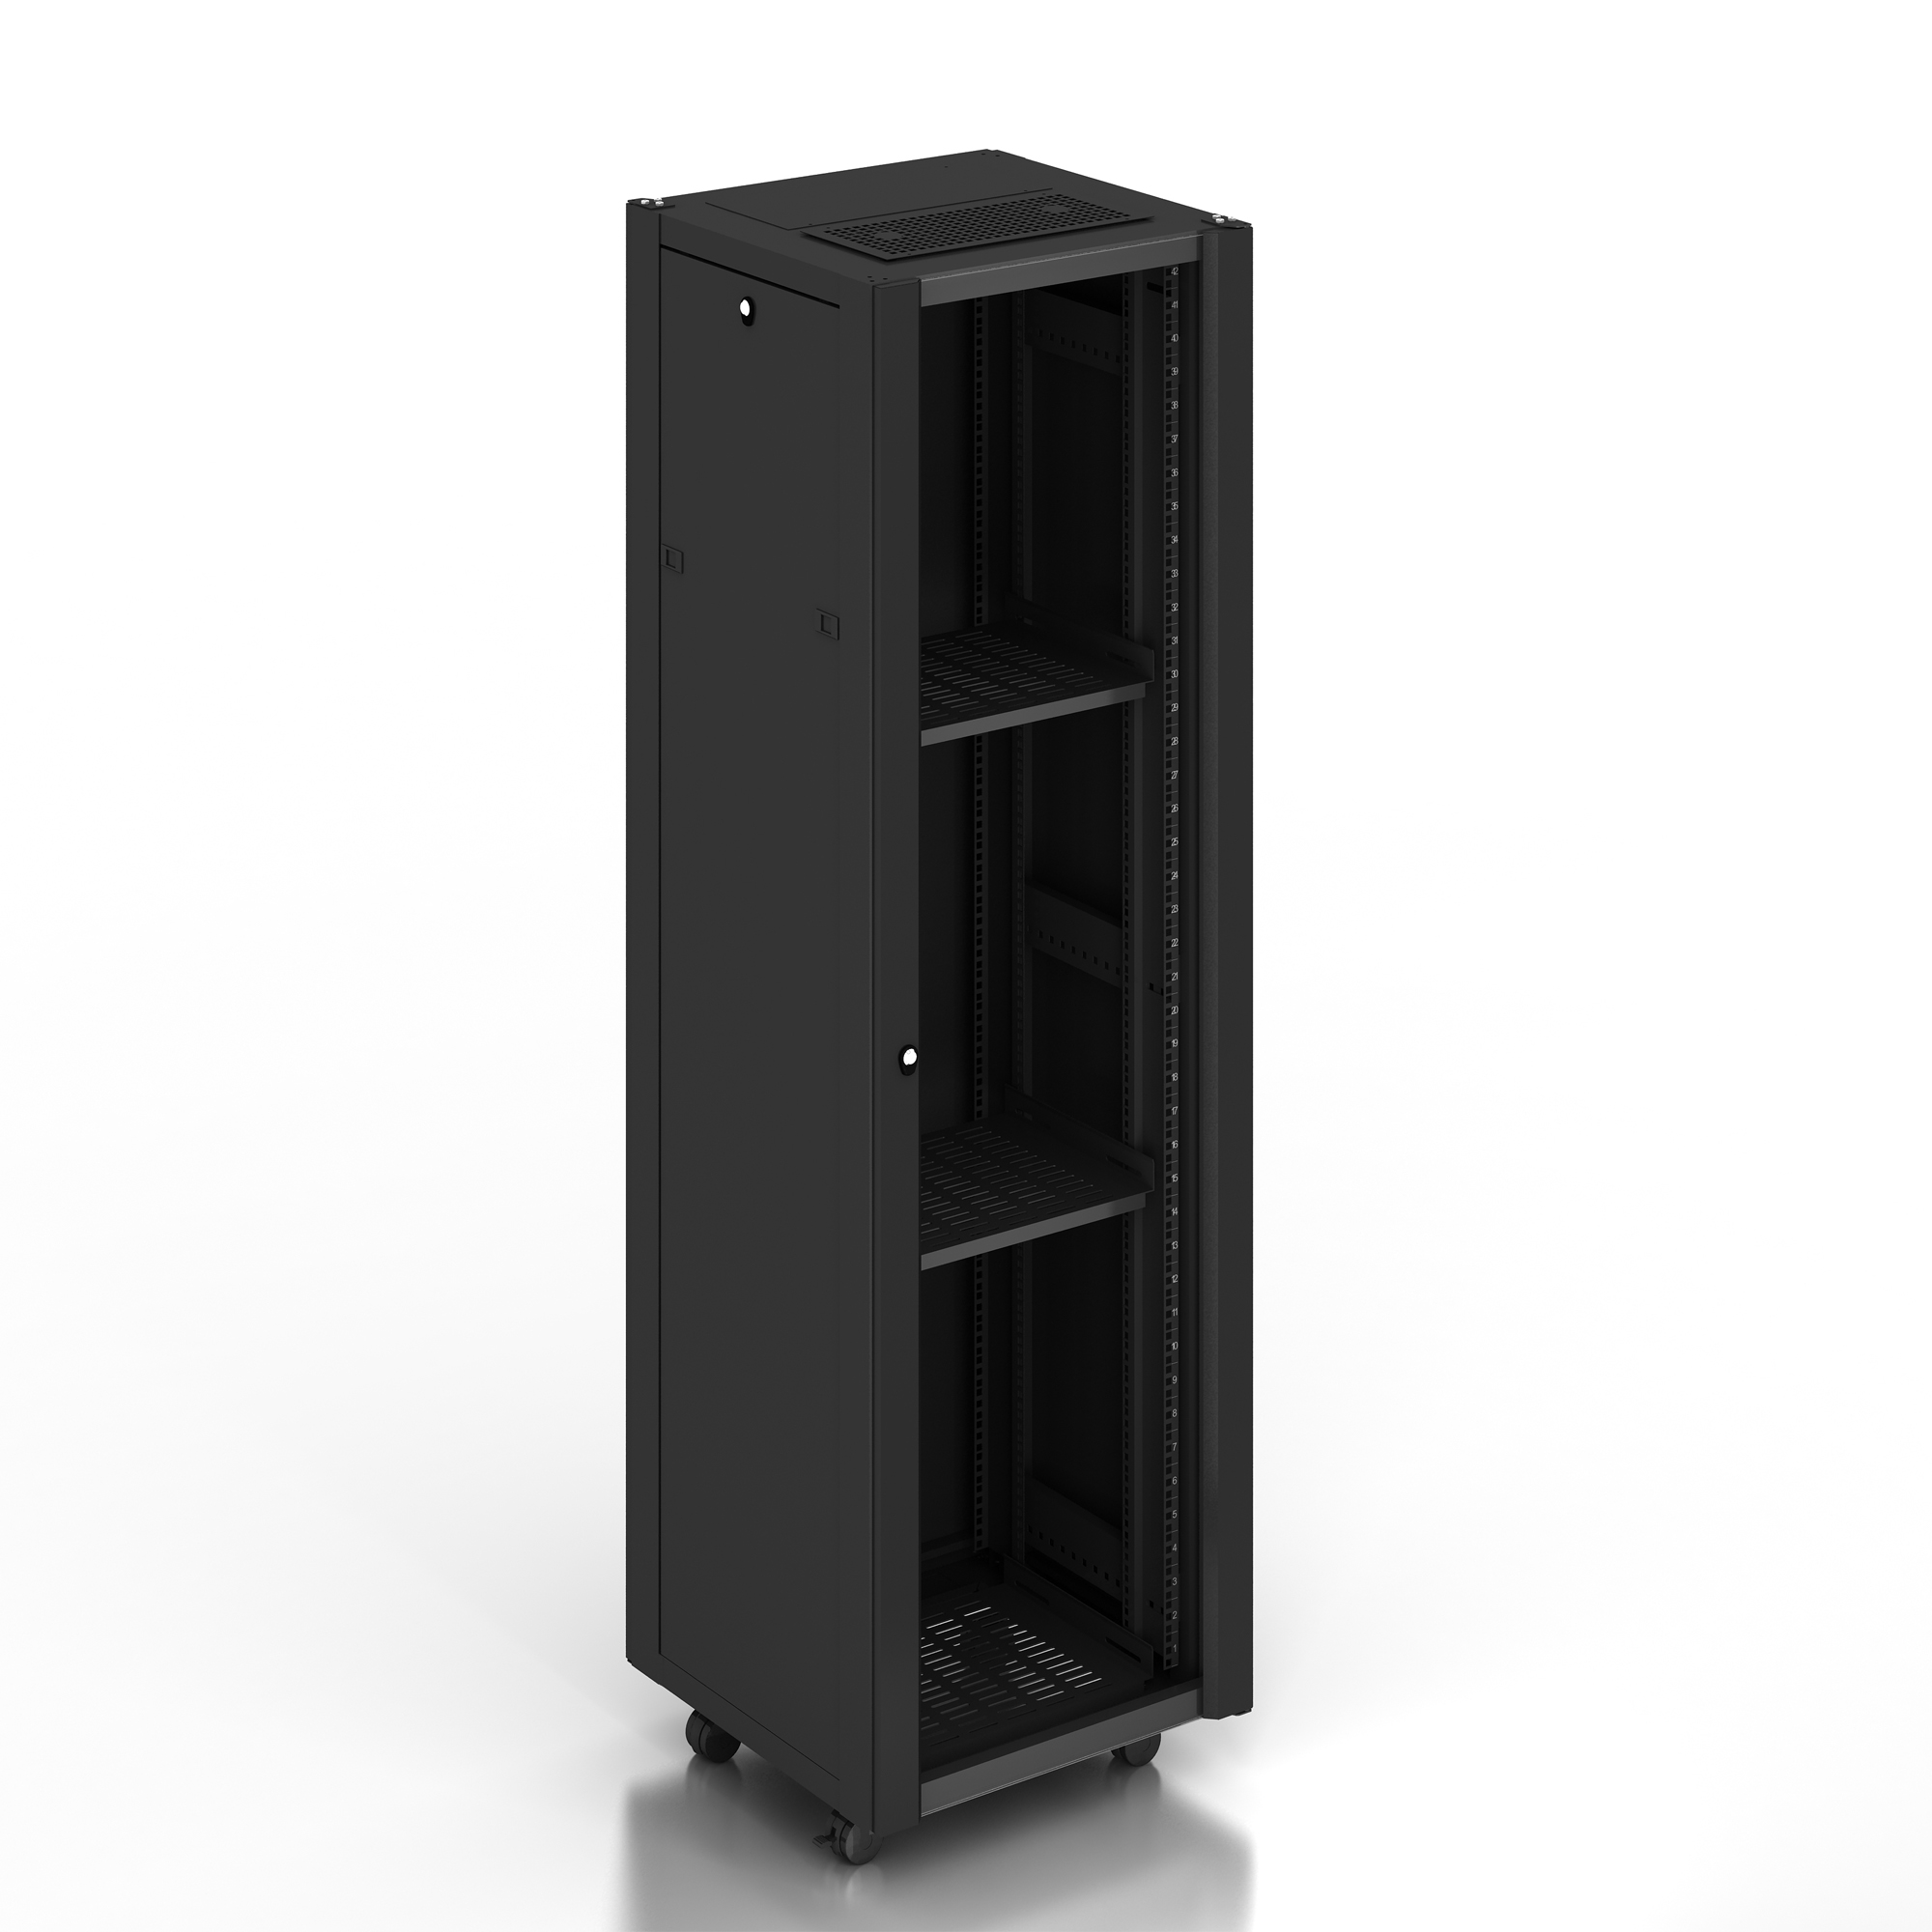  19 U Server Rack Cabinet Network